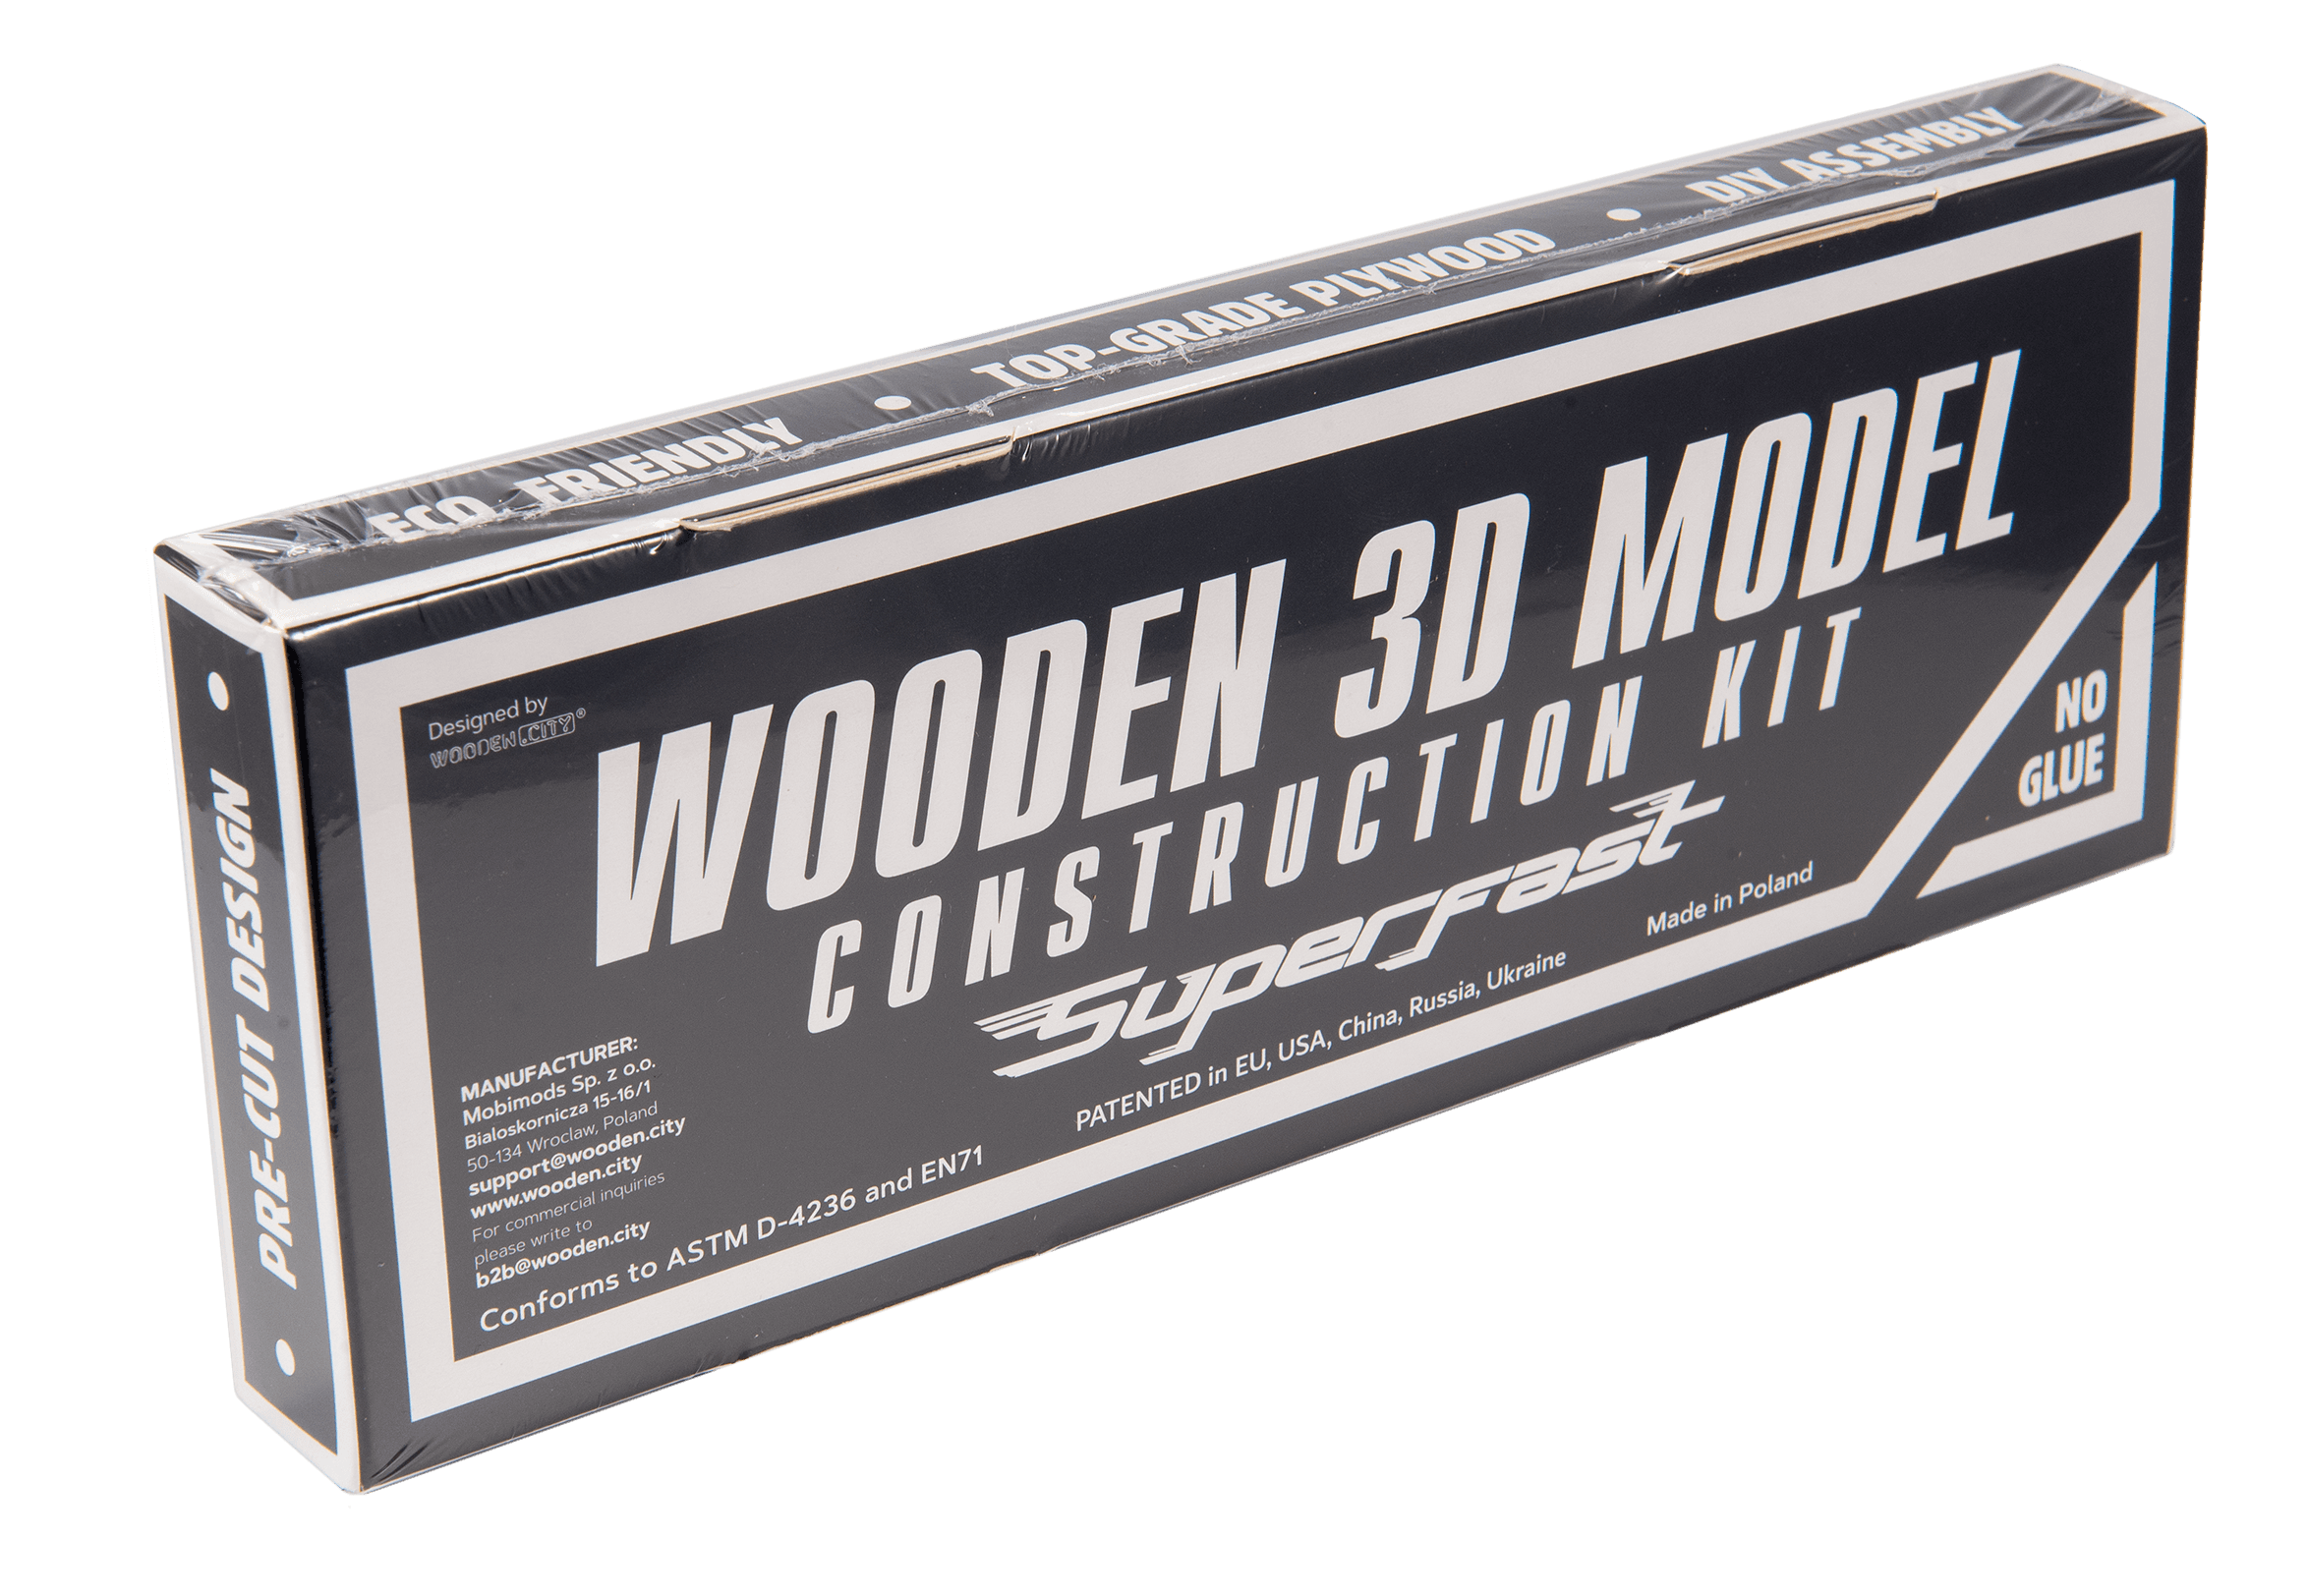 Wooden 3D Puzzle - Monster Truck Model 3